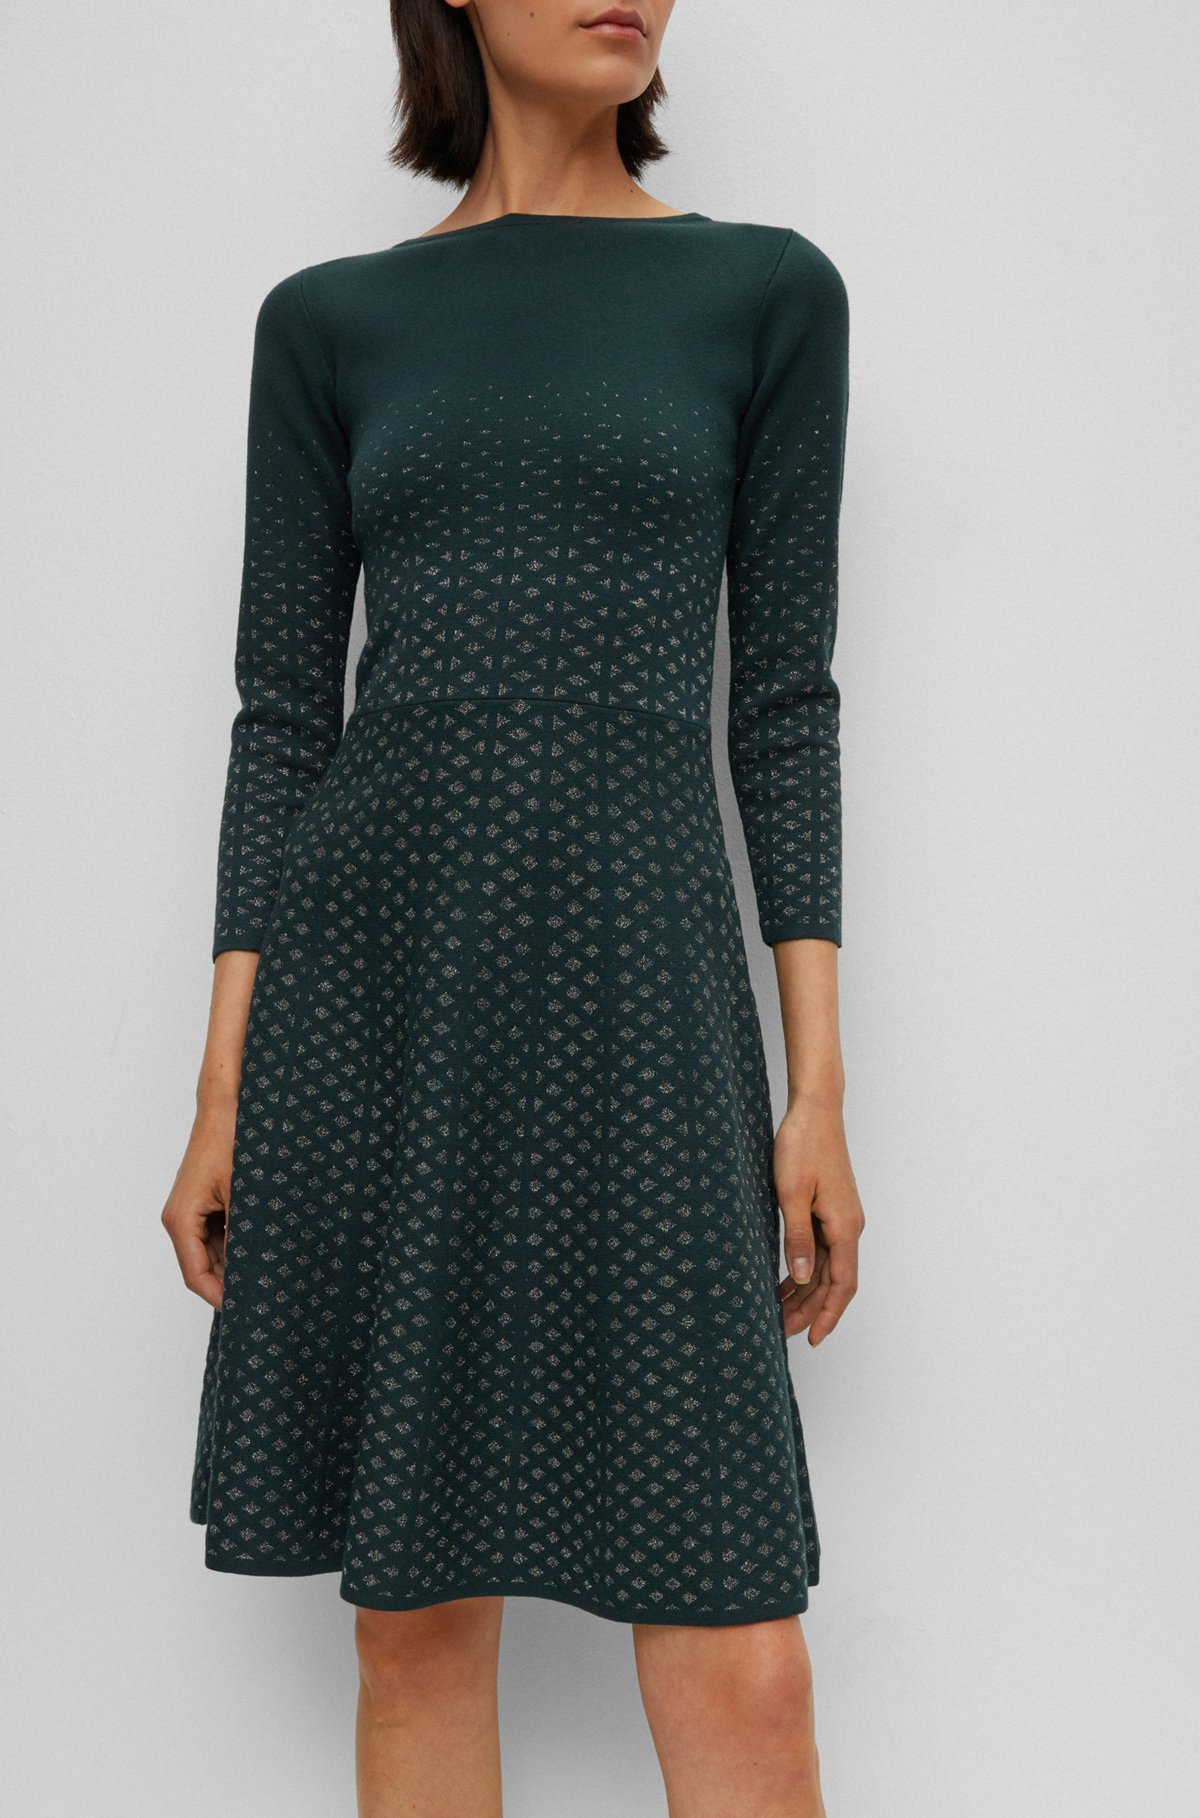 Long-sleeved dress in degradé knitted jacquard, Dark Green